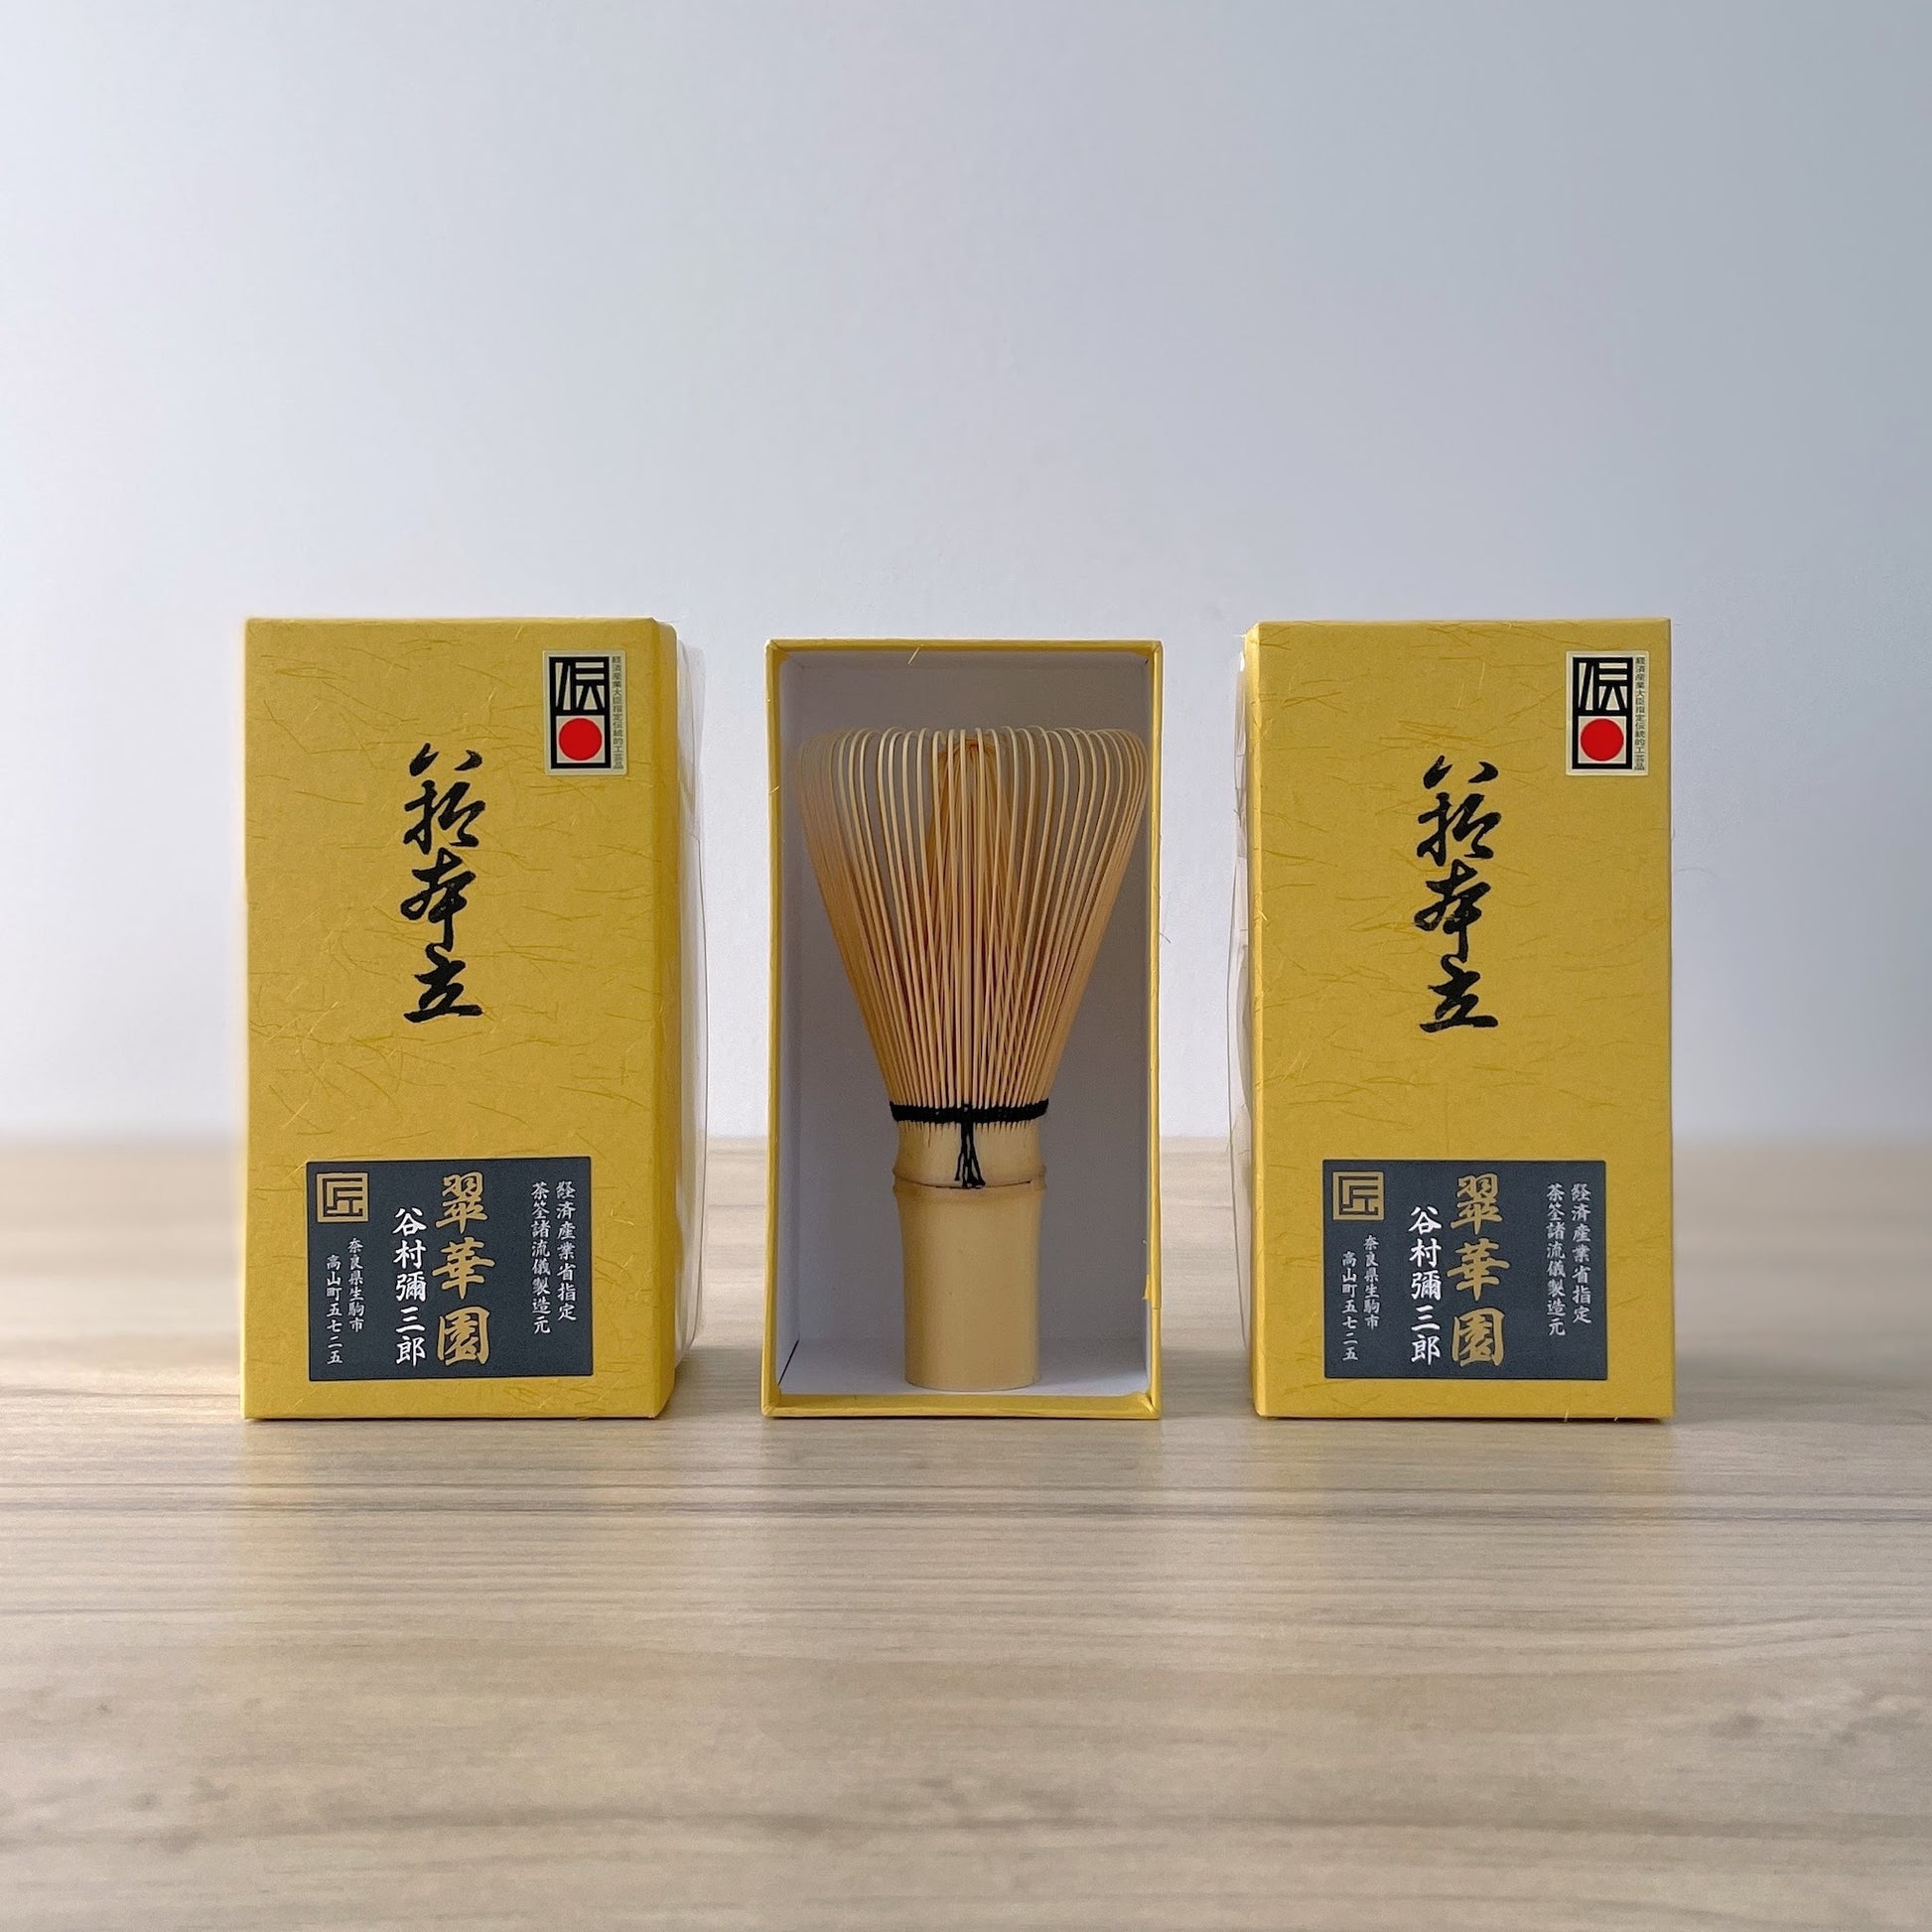 Takayama Chasen Premium - Black Bamboo Matcha Whisk – HEALTH BAR GmbH